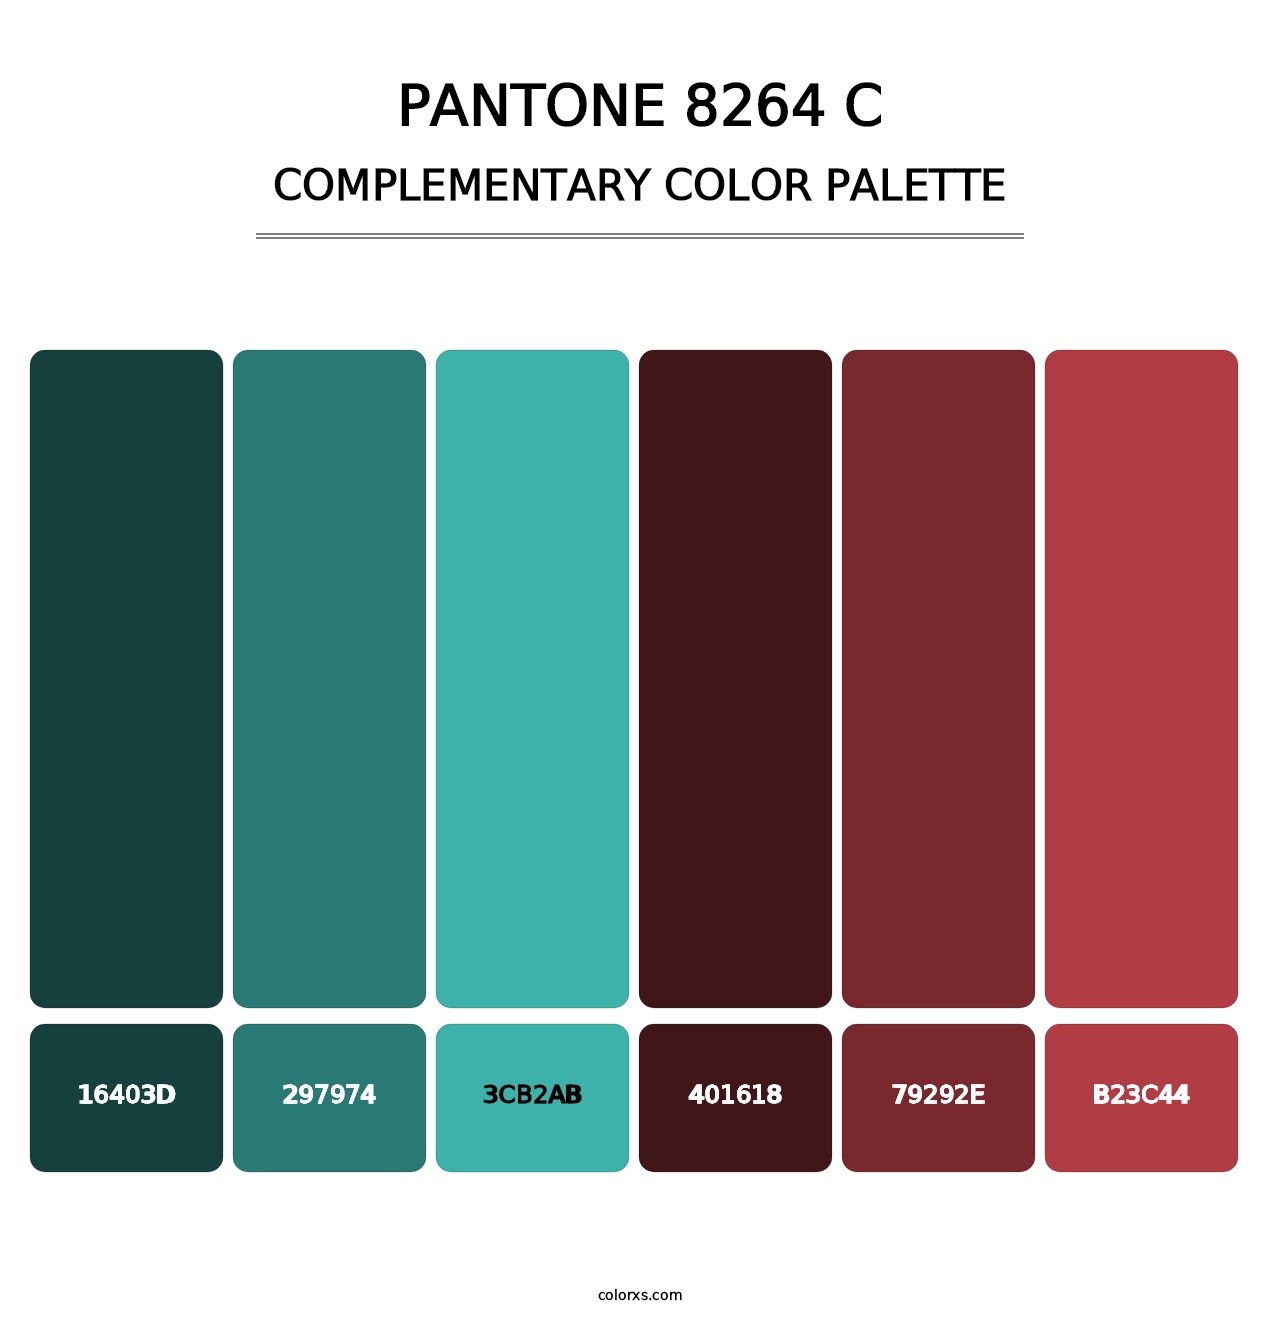 PANTONE 8264 C - Complementary Color Palette